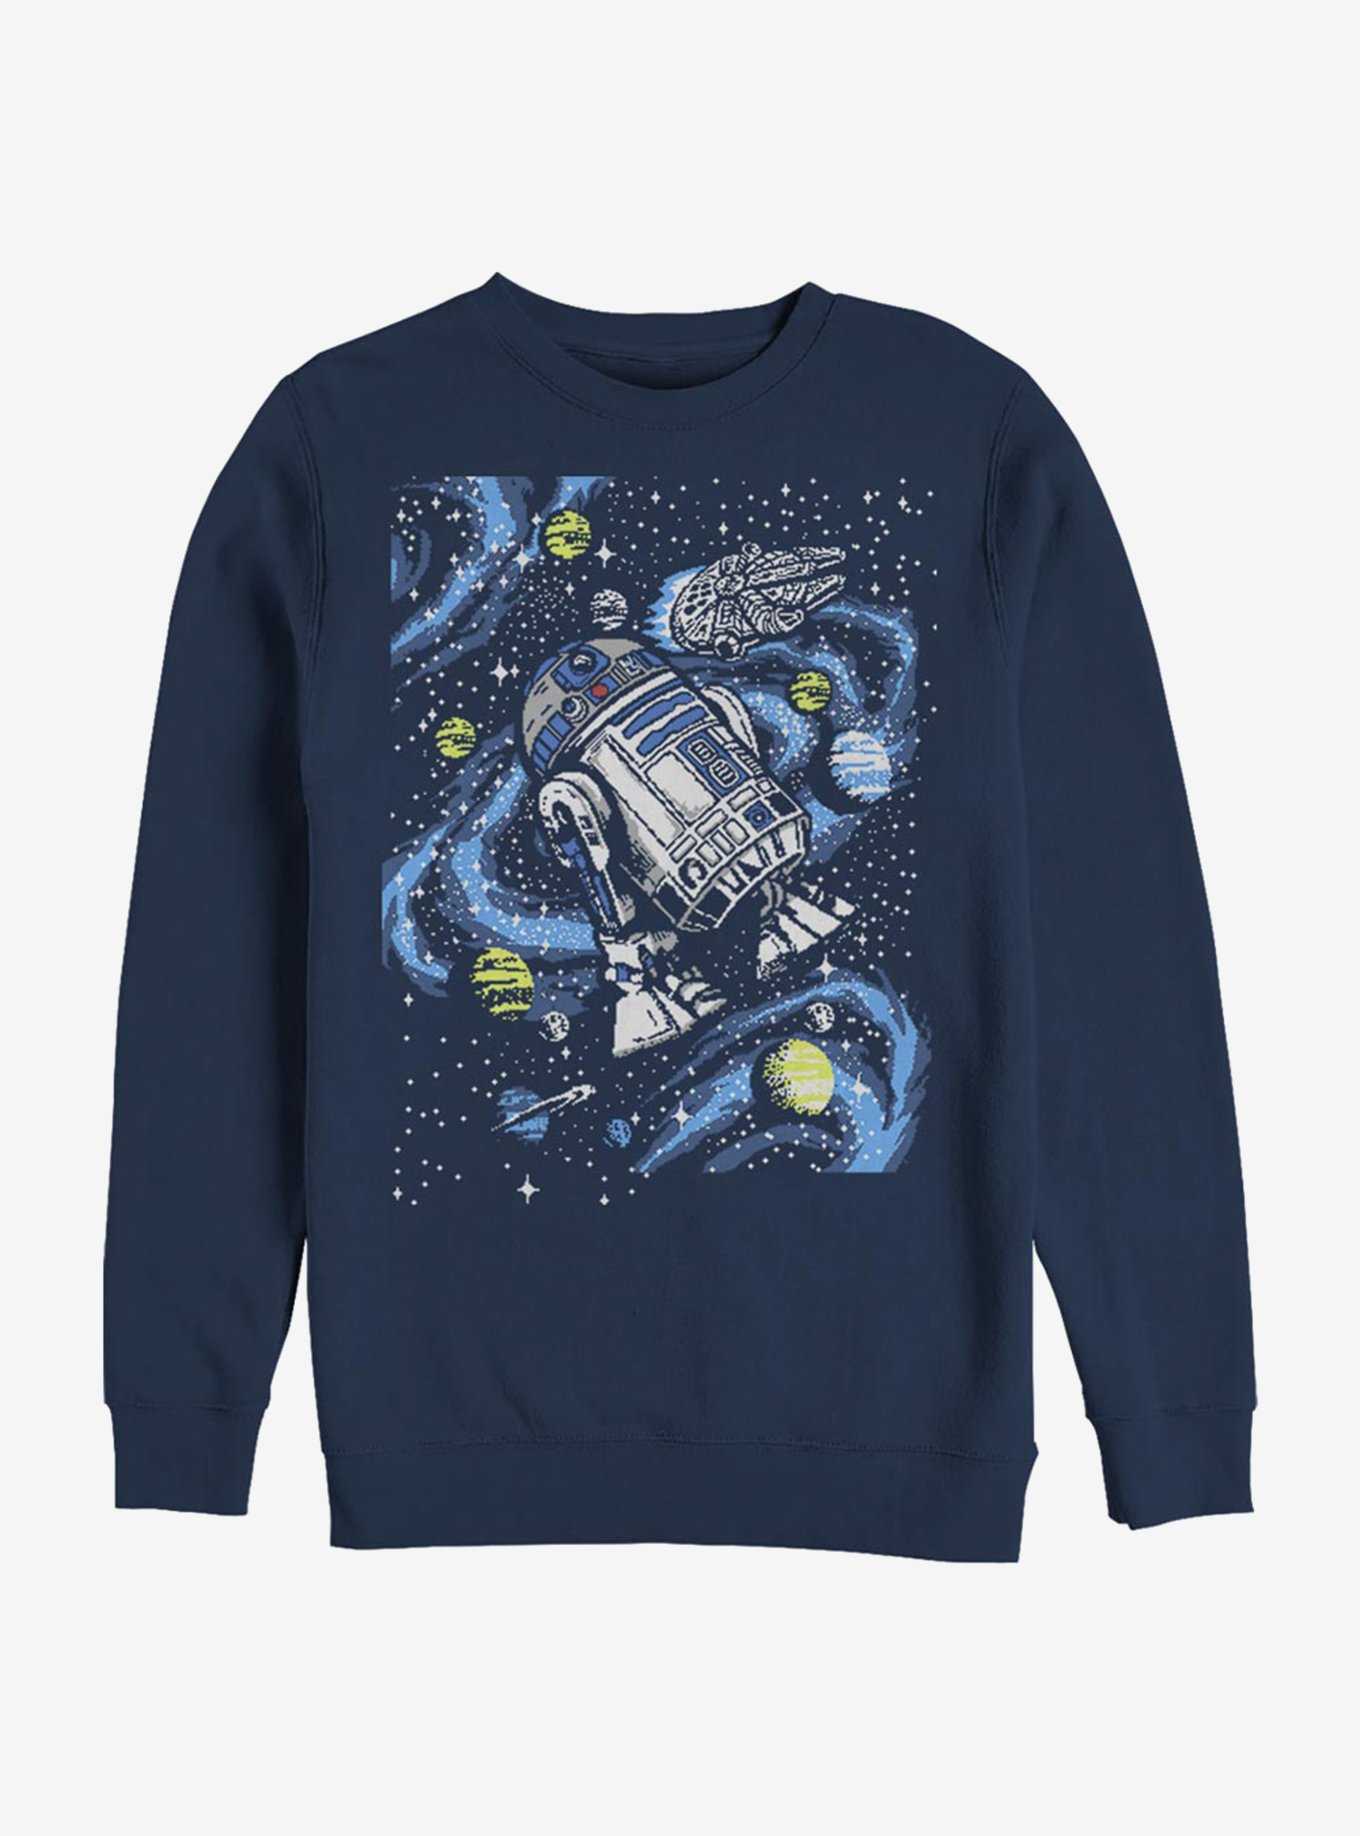 Star Wars R2-D2 Floating Sweatshirt, , hi-res